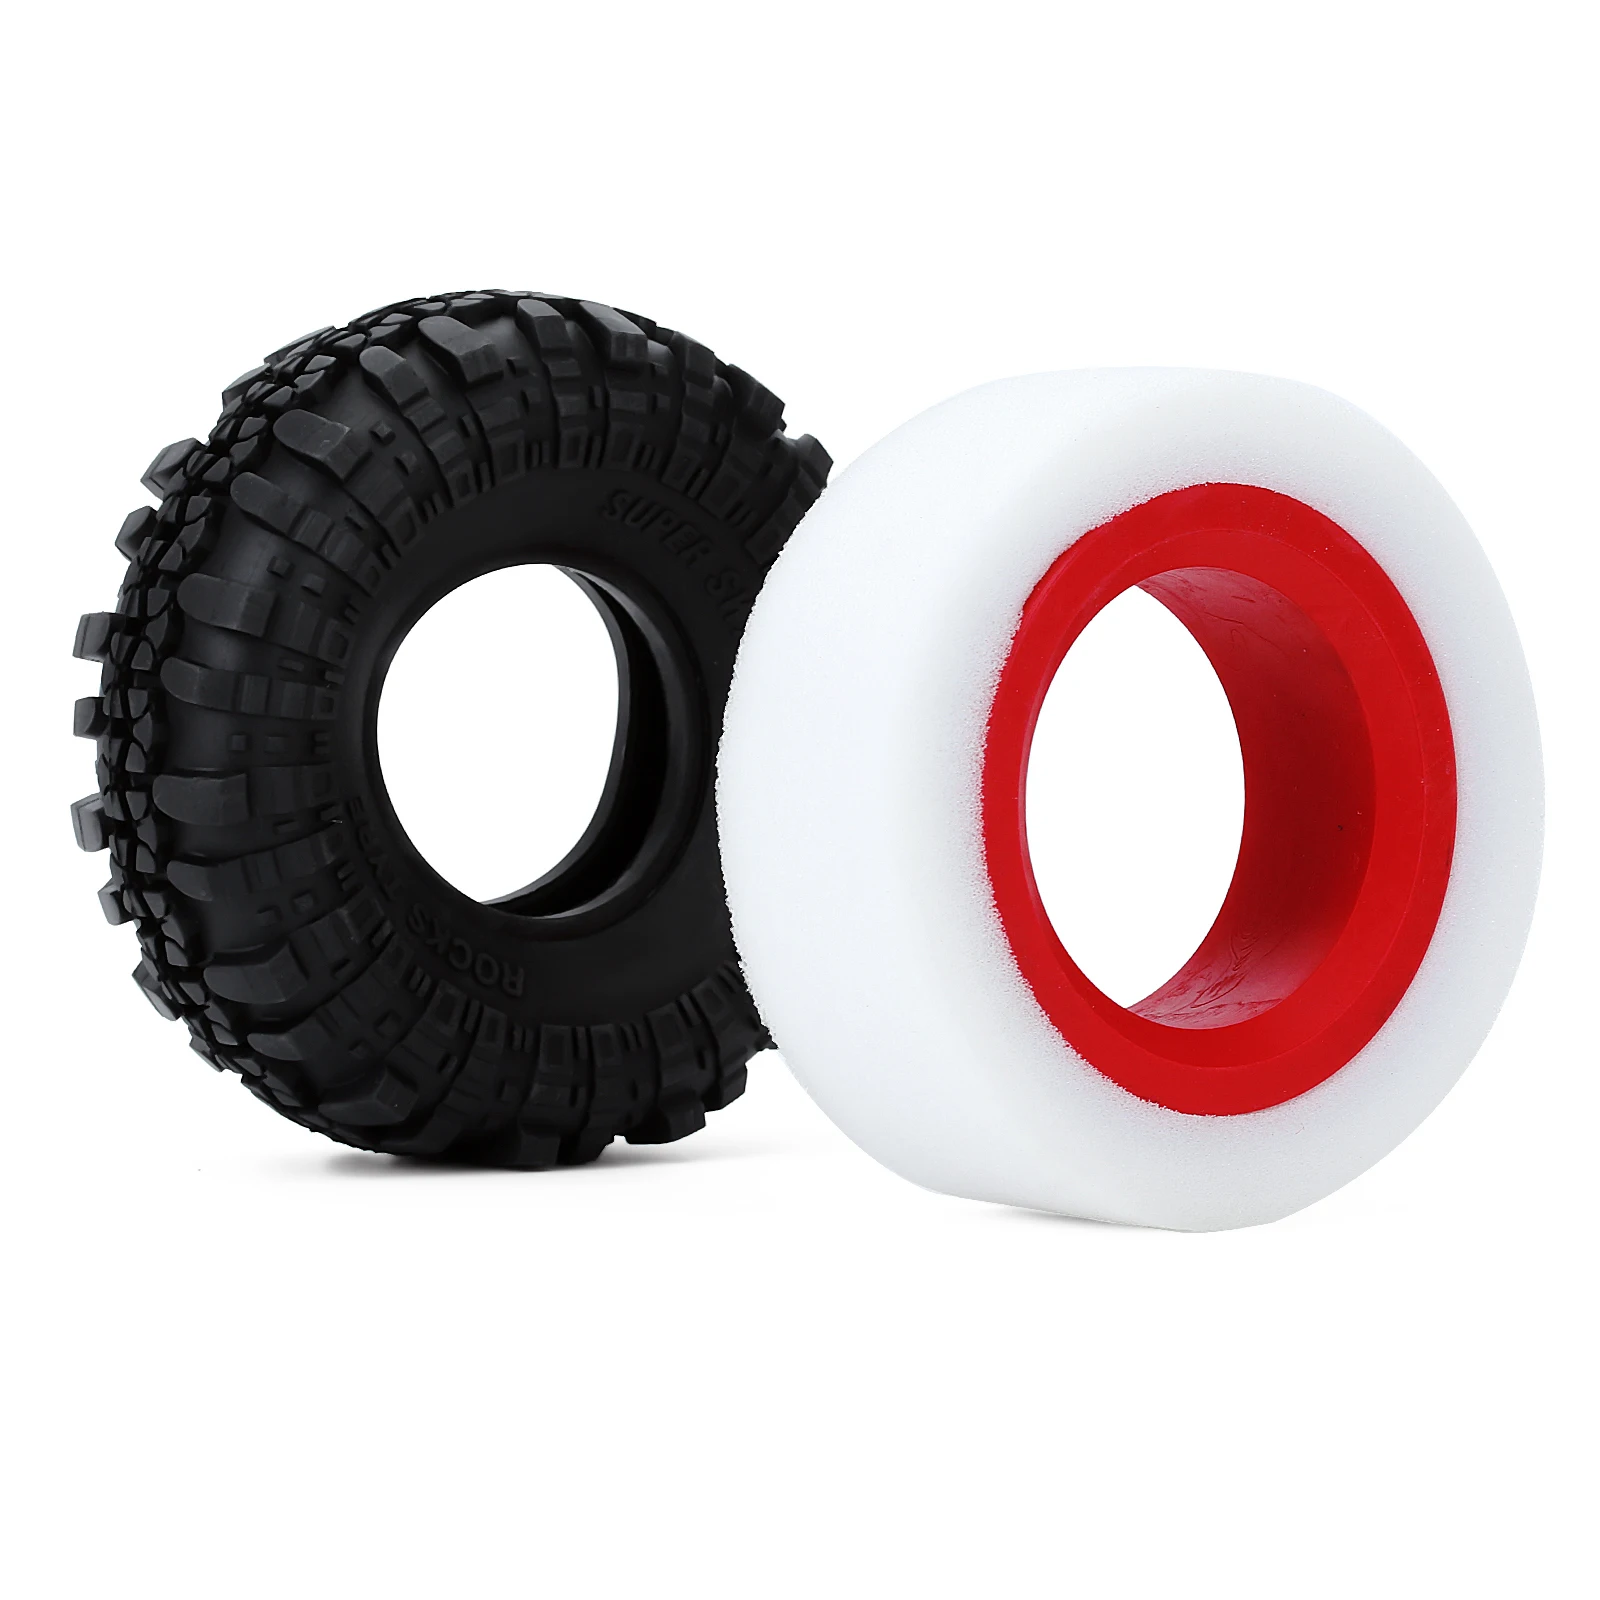 INJORA RC Tire Foam 4pcs Tires Inserts Foam 120mm for 1.9inch Wheel Tires 1/10 RC Crawler Axial SCX10 90046 Traxxas TRX4 Redcat Gen8 